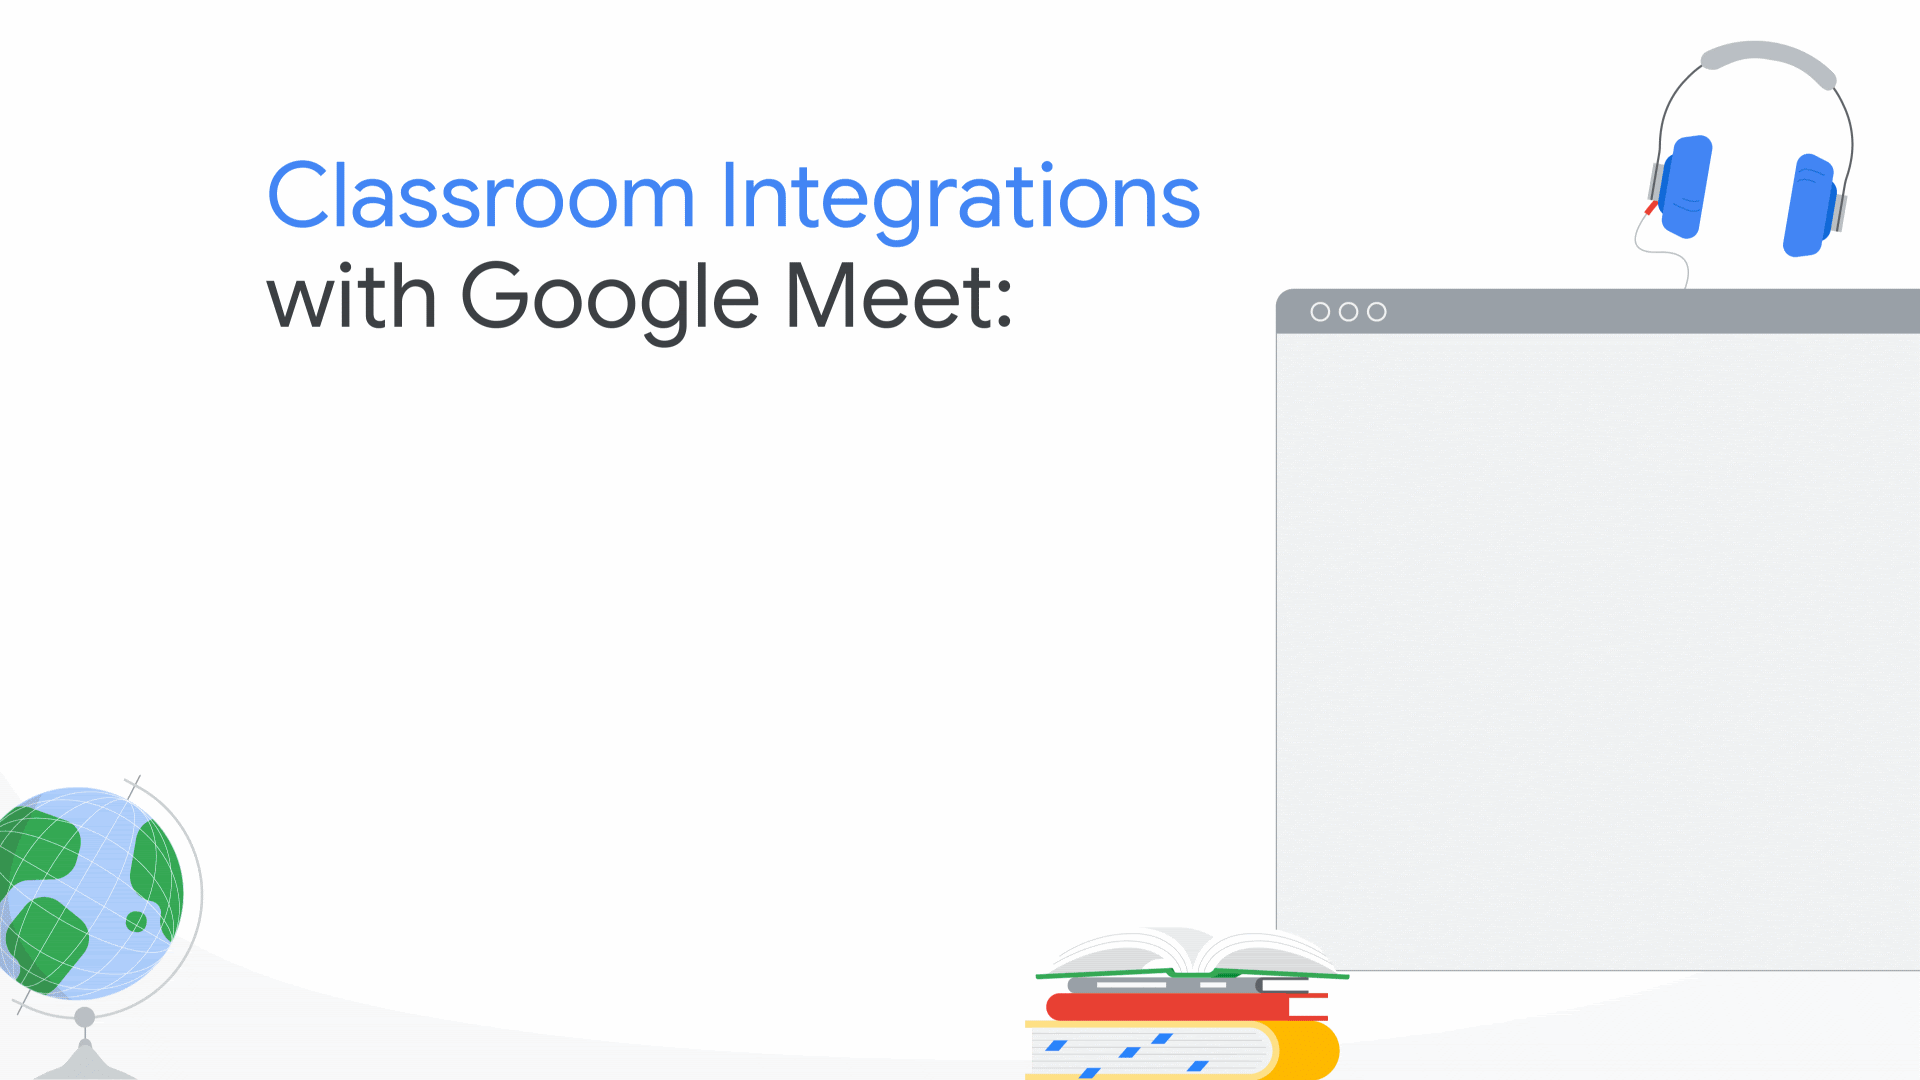 Classroom integrations with Google Meet.